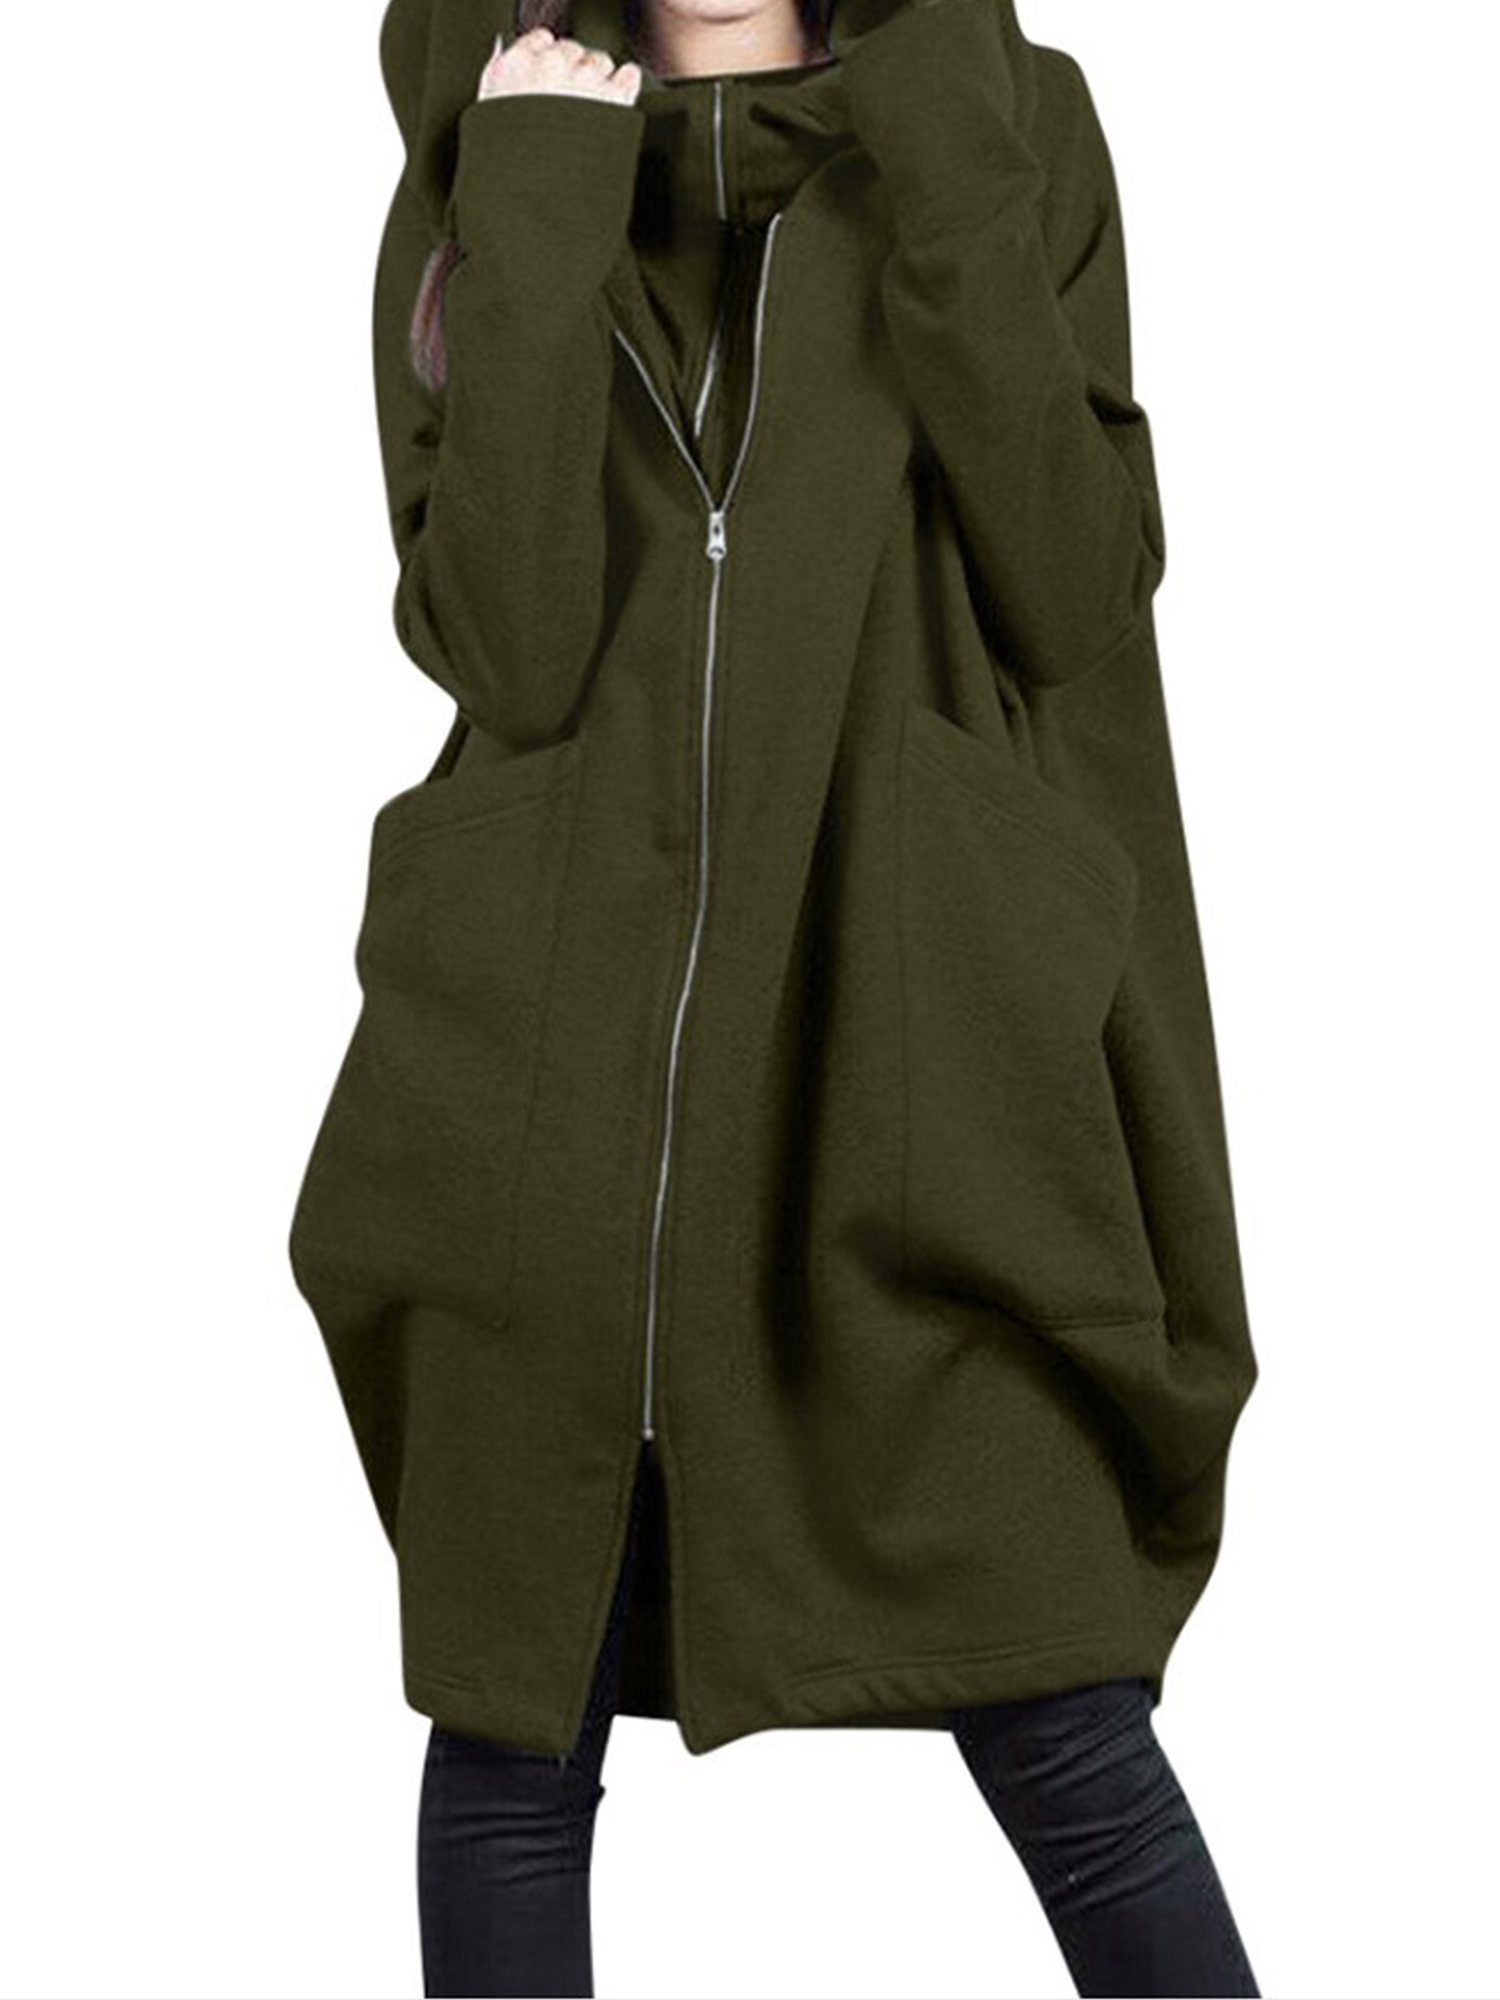 Women Mid-Length Hoodie Coat Pocket Zipper Jackets Casual Plus Size Sweatshirts Loose Overcoat Parkas Solid Color Outerwear Ladies Long Tops Women Plus Jackets Parkas - image 1 of 4